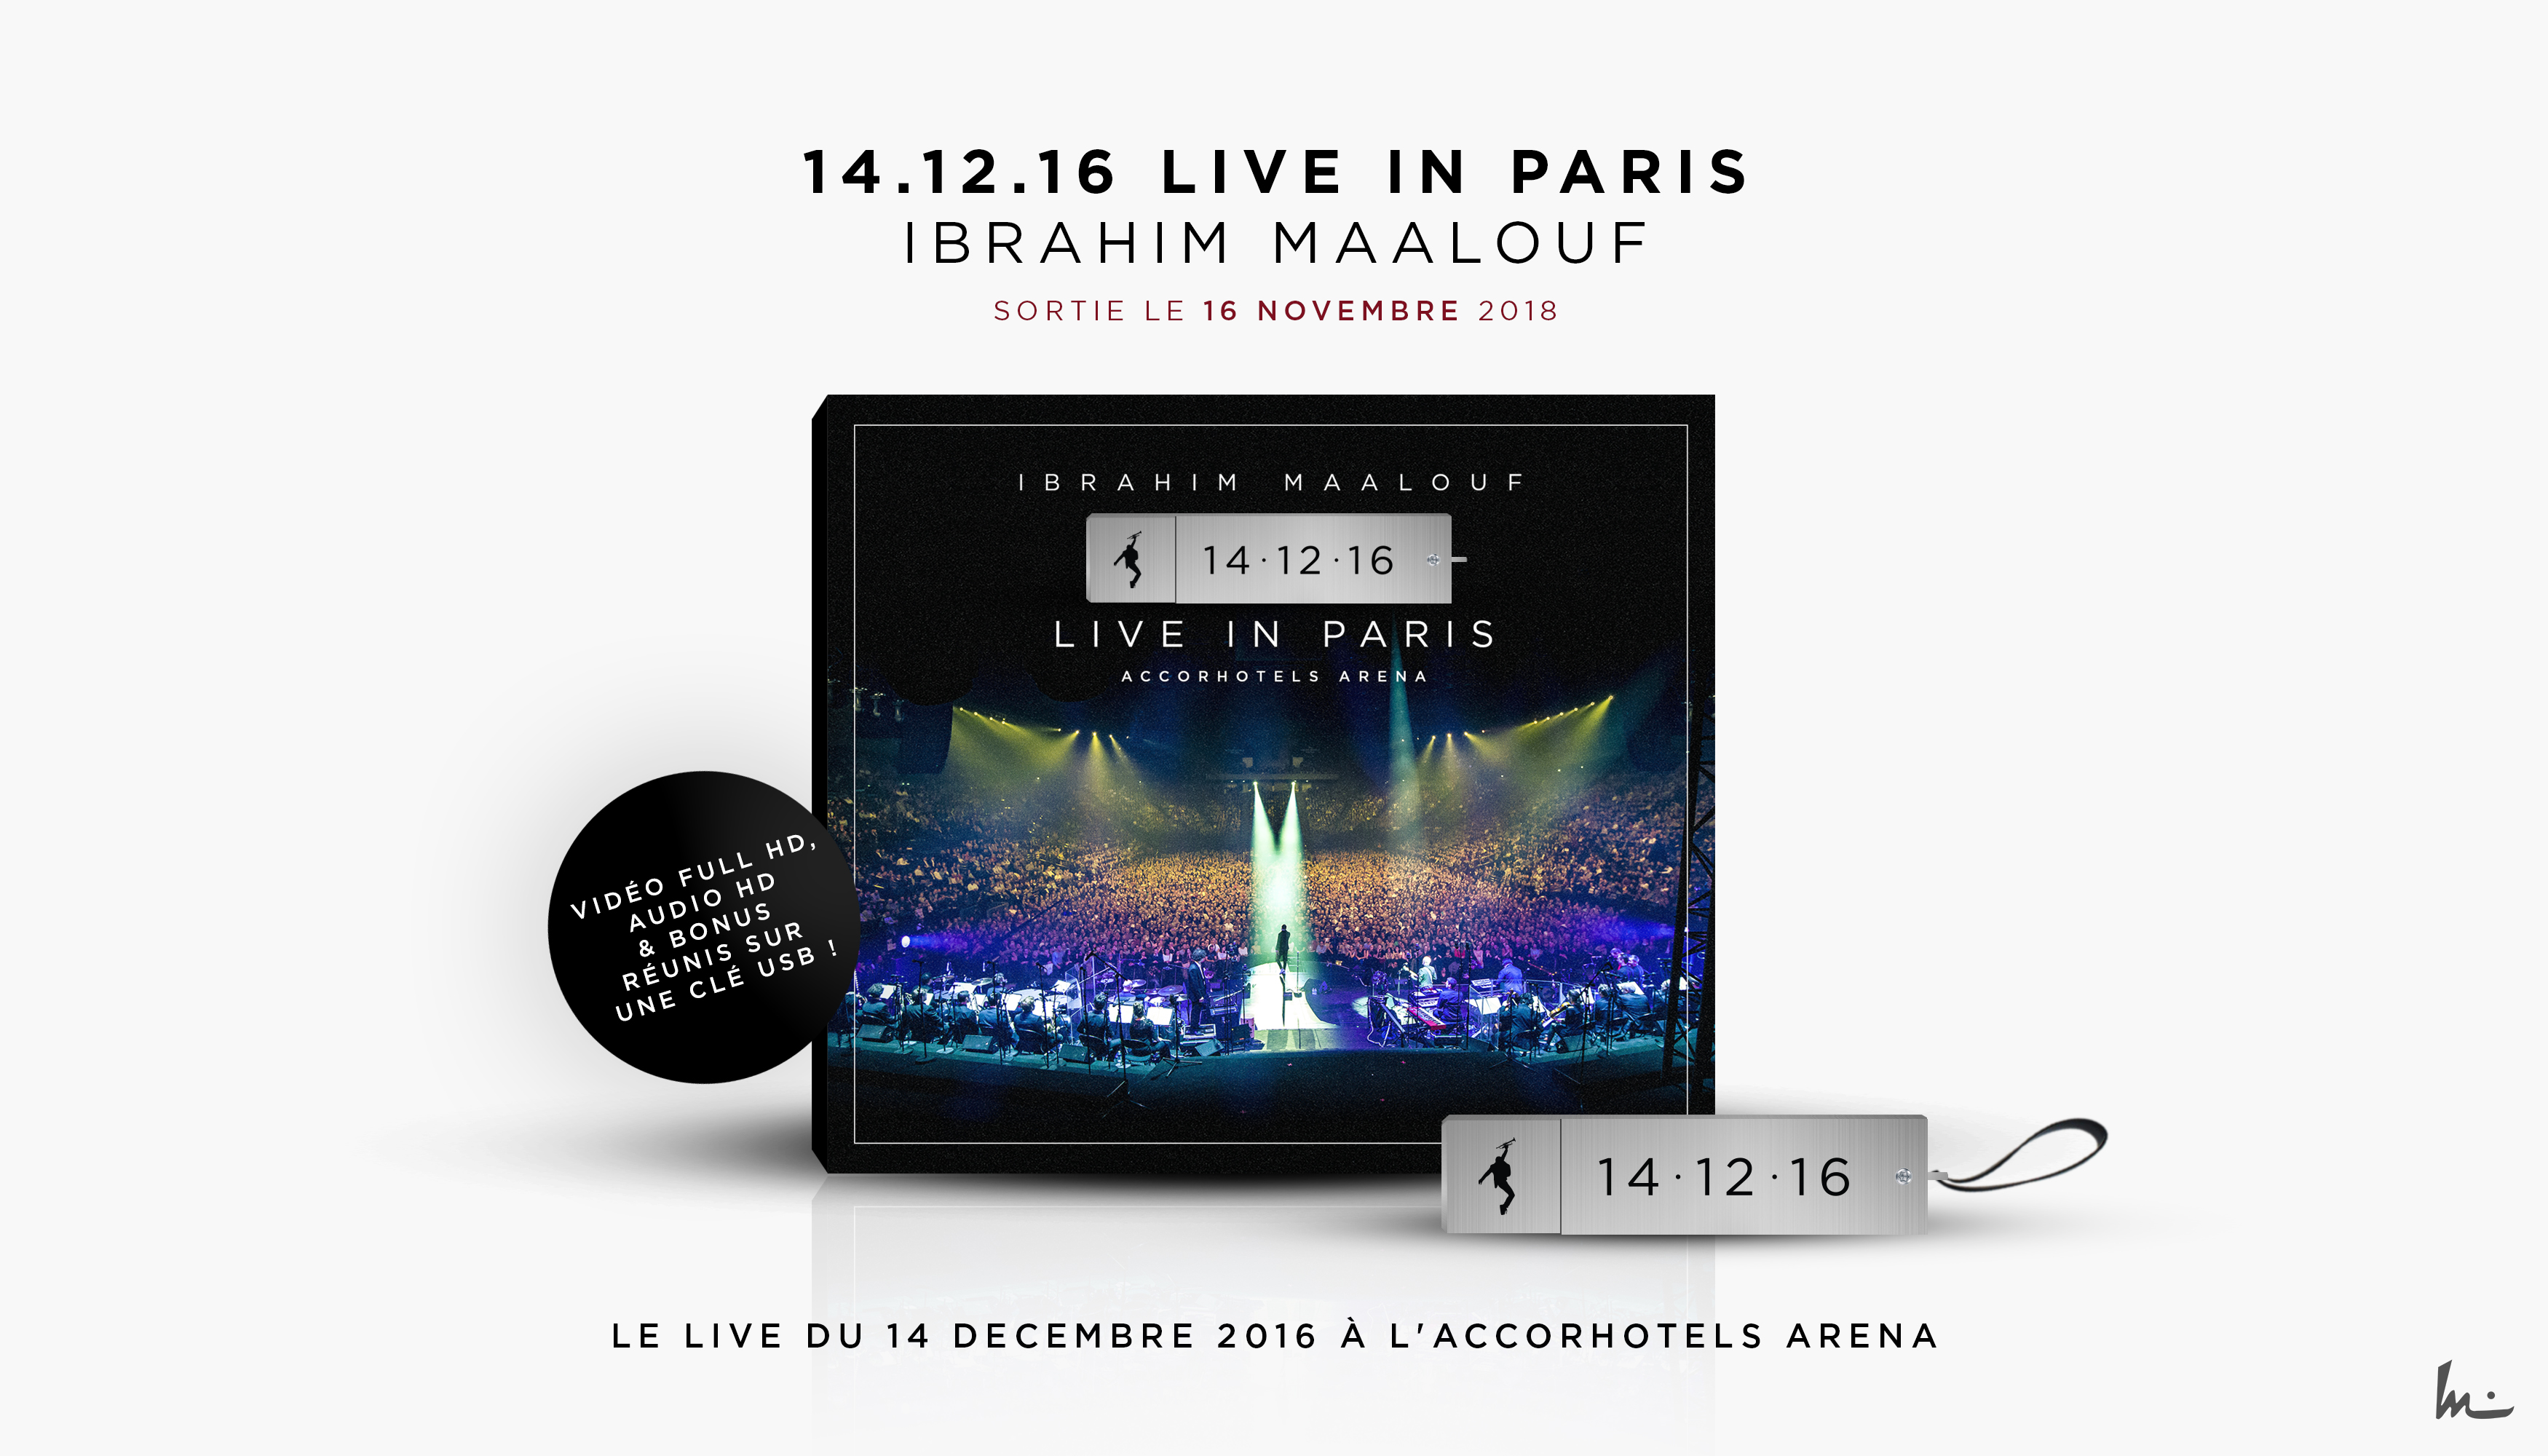 Ibrahim Maalouf sort son live mythique : 14.12.16 - Live In Paris